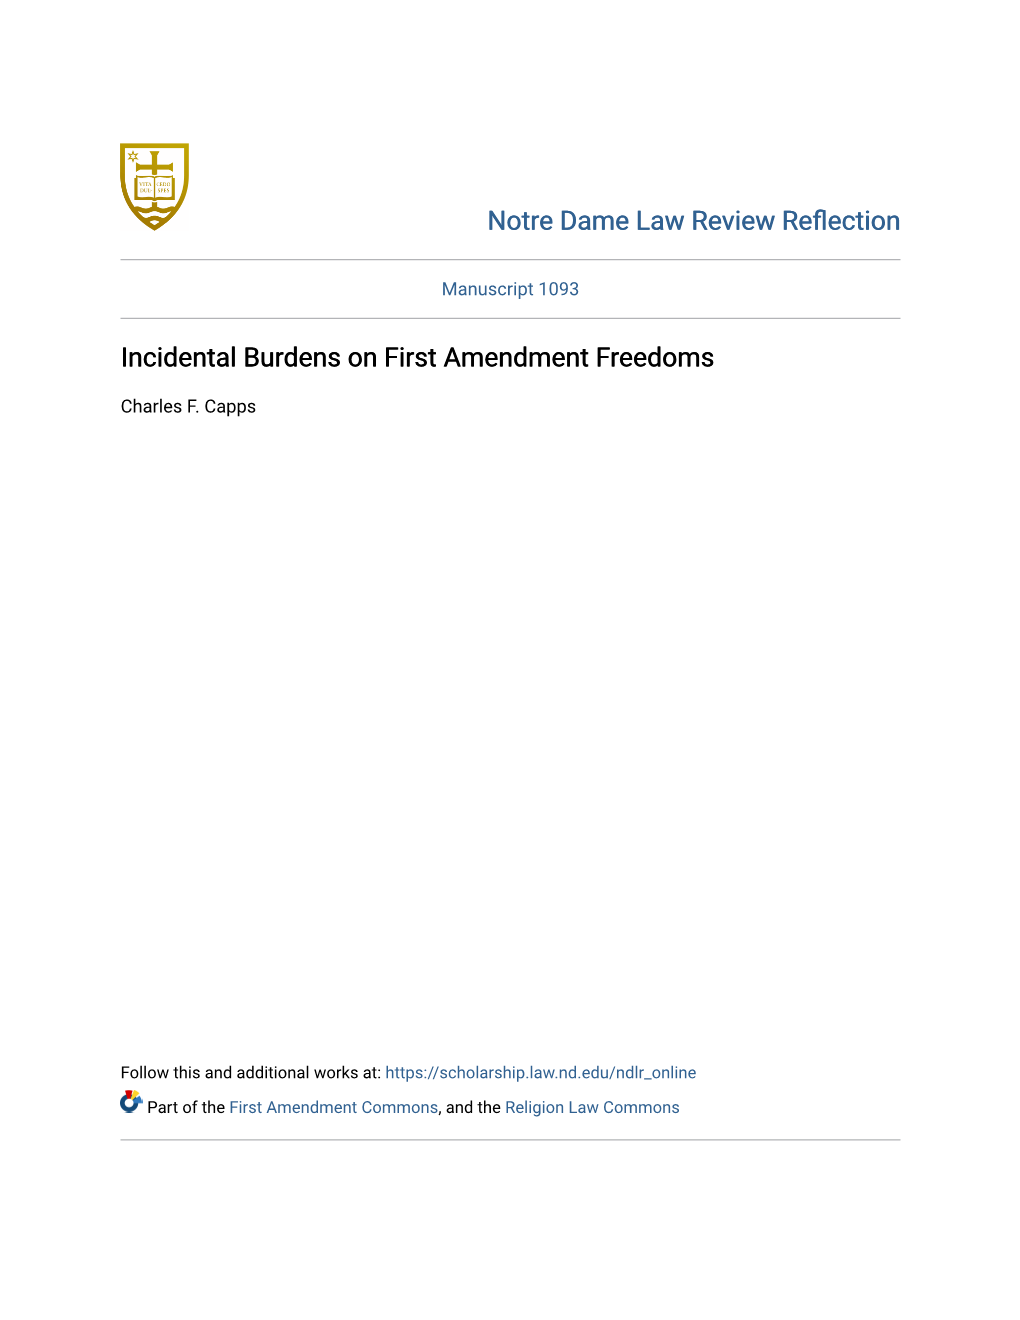 Incidental Burdens on First Amendment Freedoms